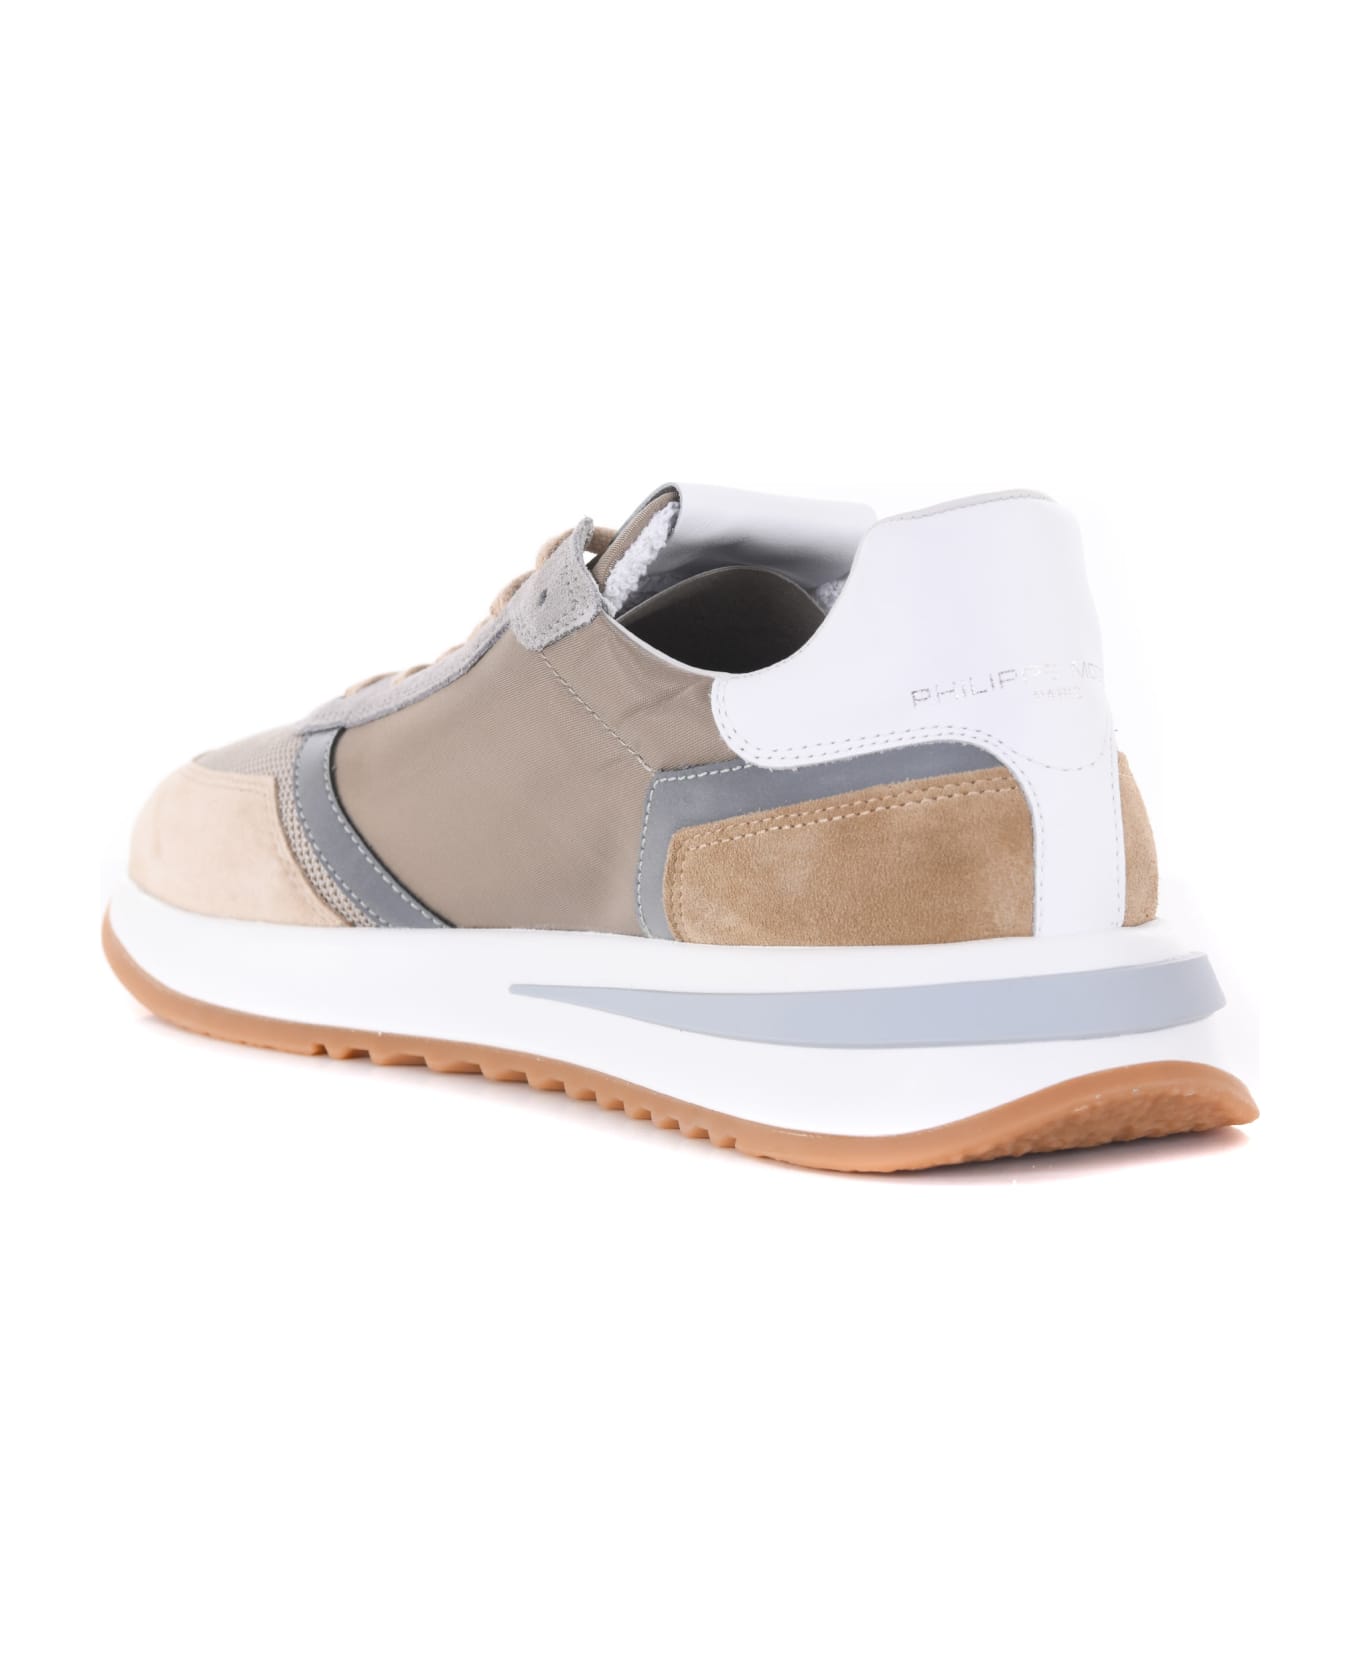 Philippe Model Sneakers - Beige/grigio スニーカー